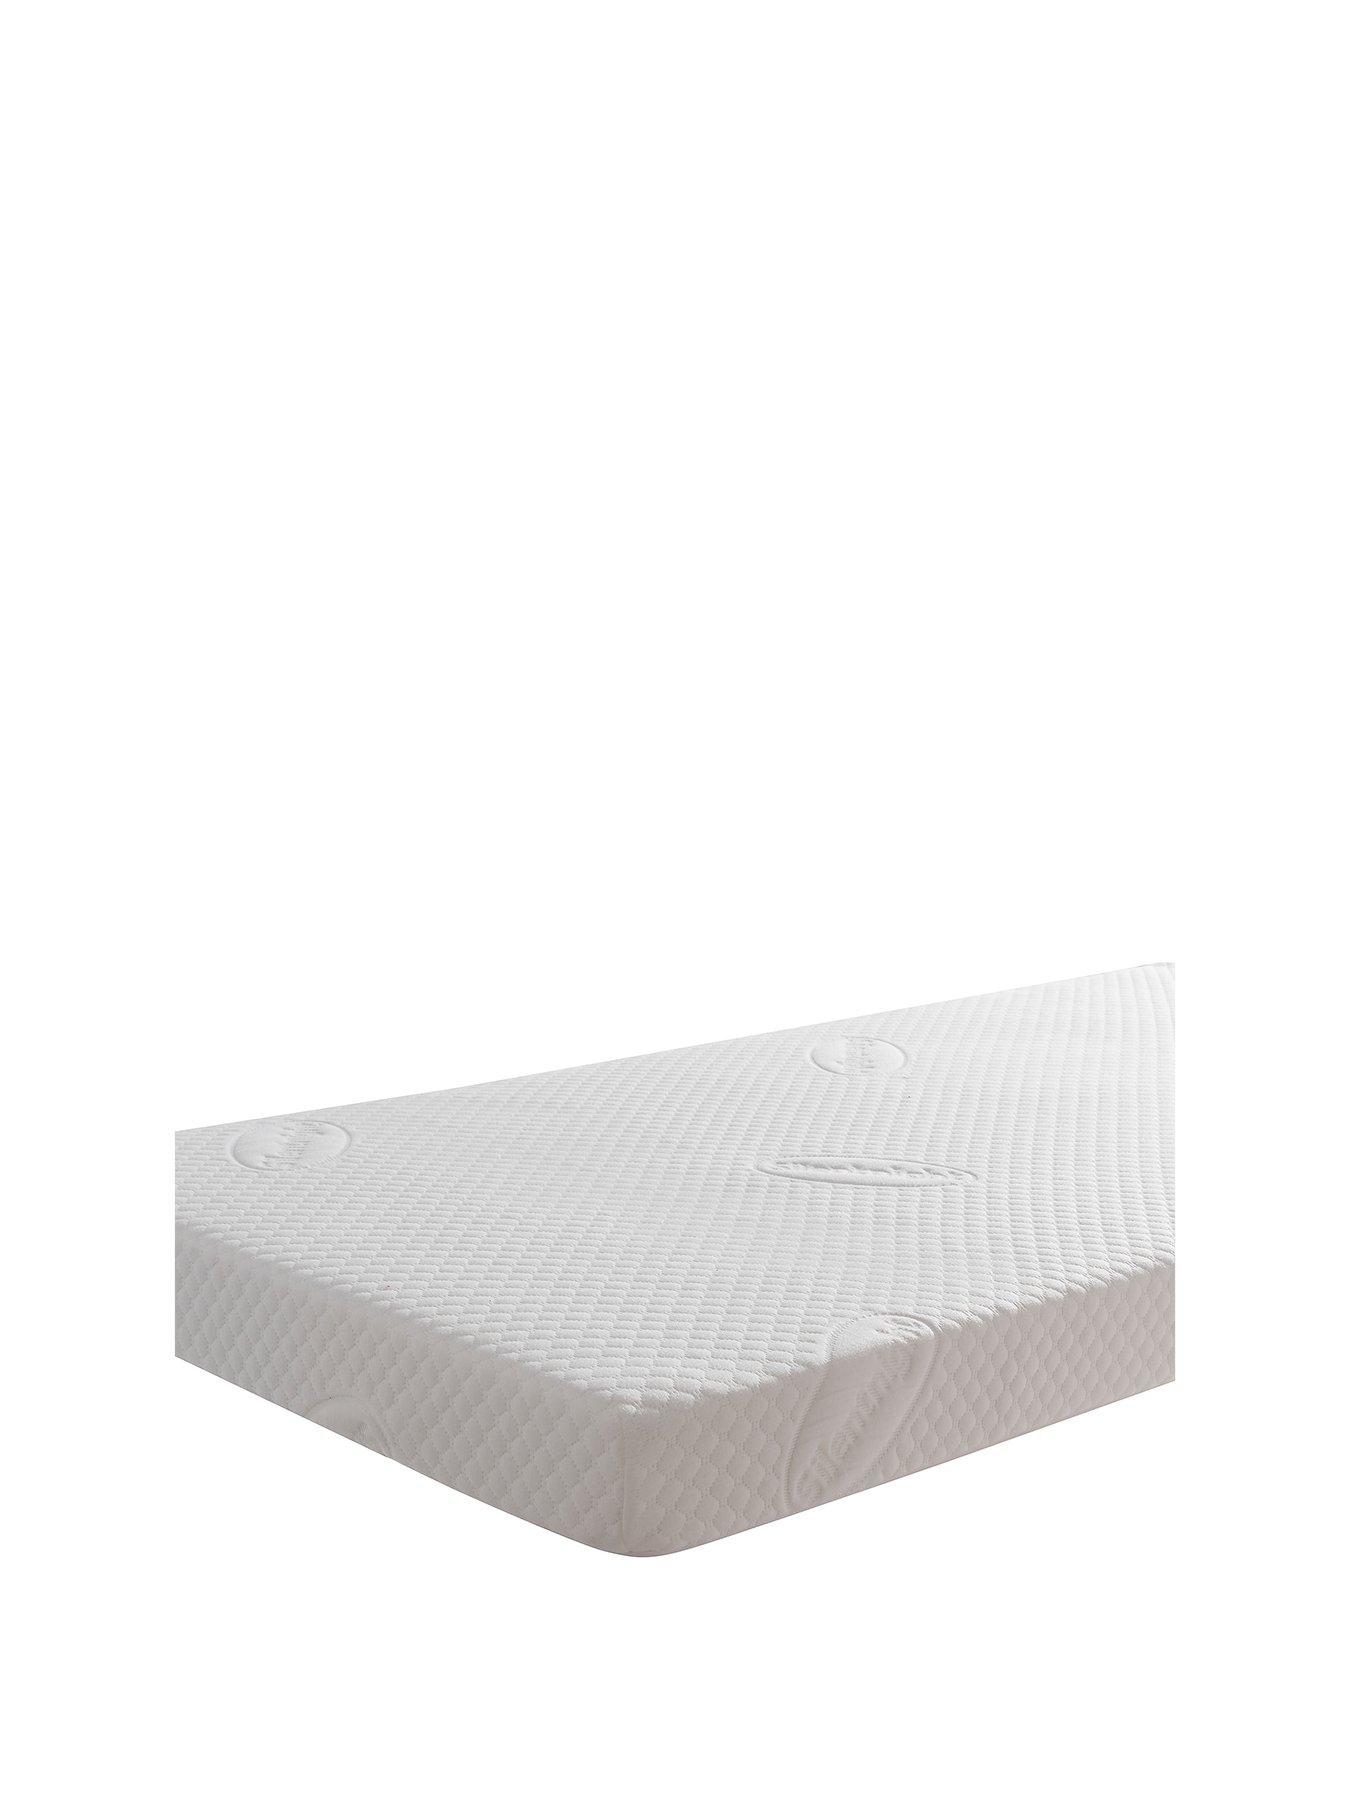 cot bed mattress 132 x 70